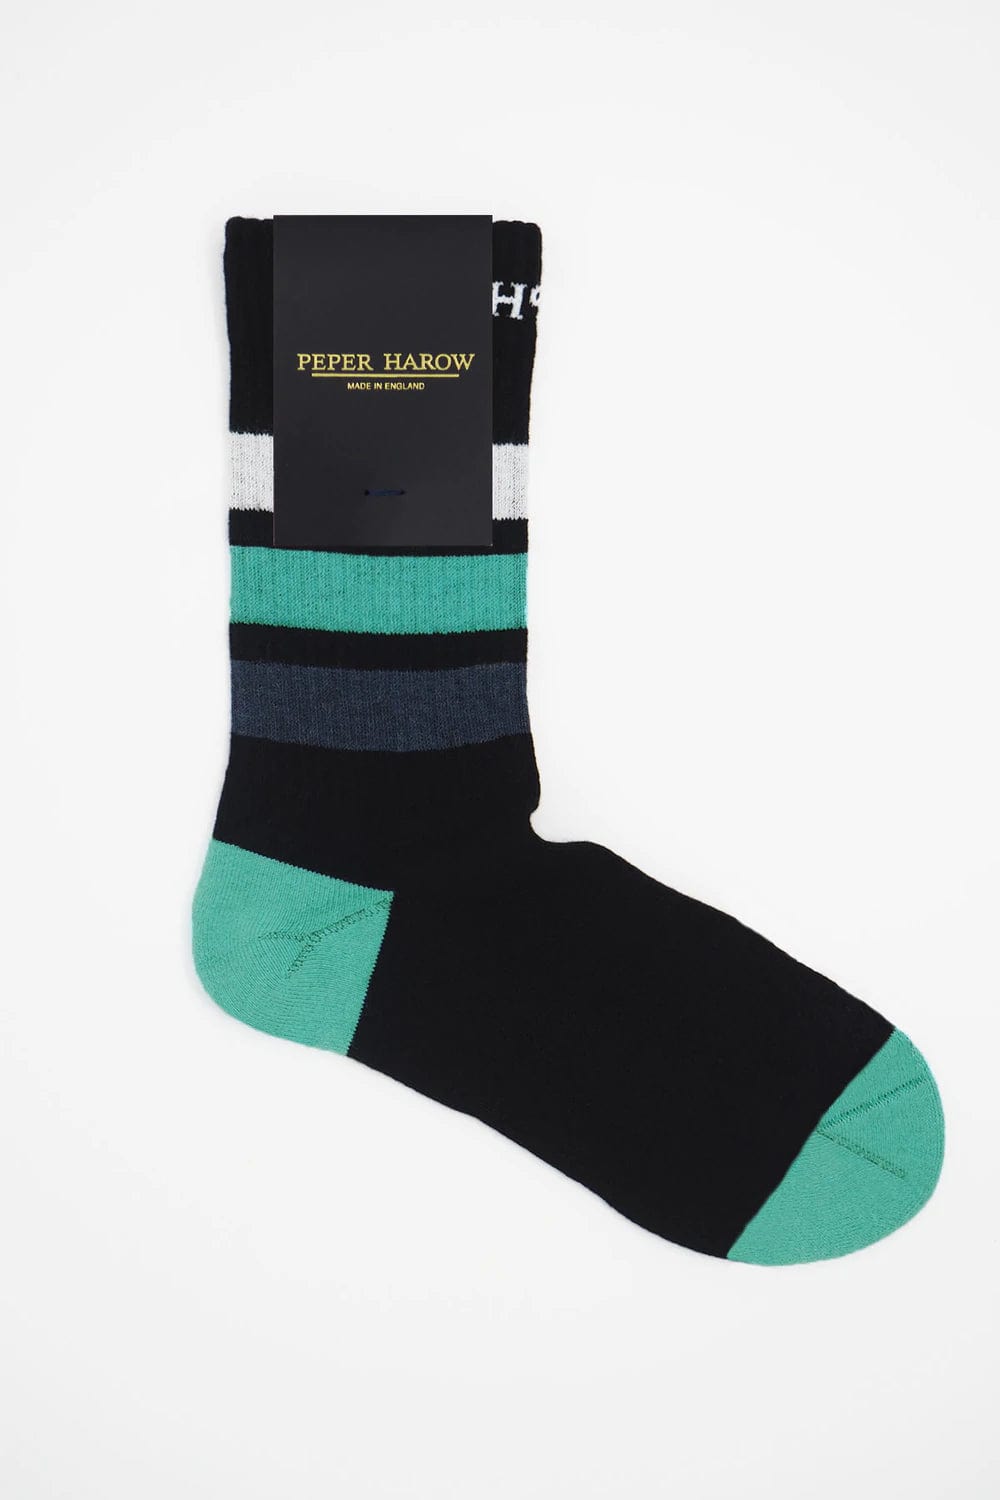 Peper Harow Black Striped Sports Socks 